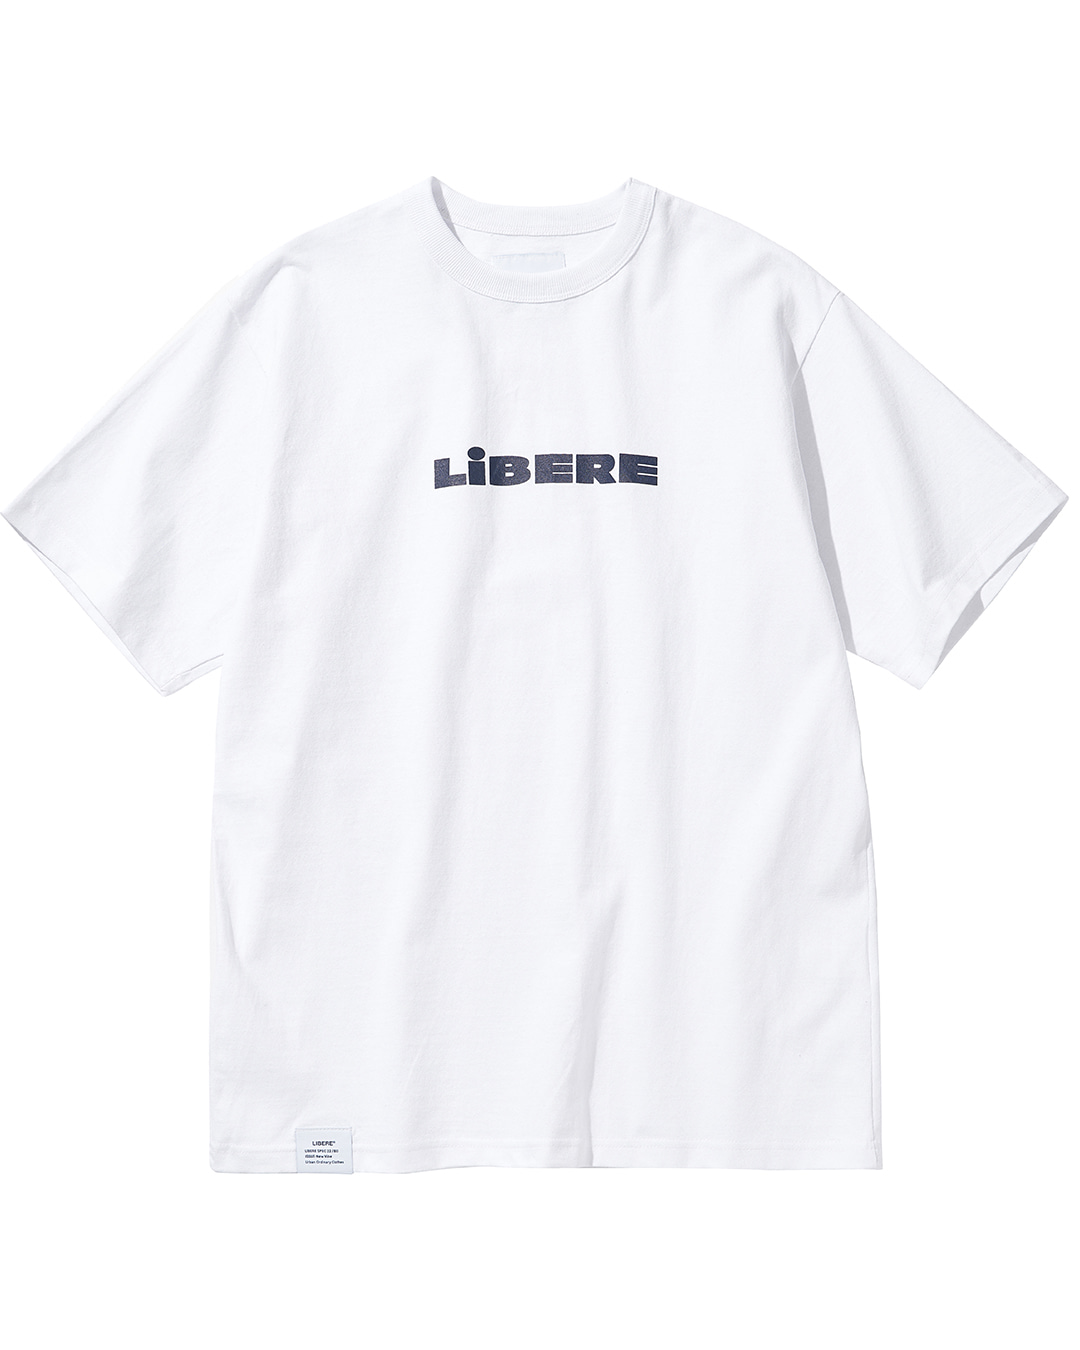 LOGO T-SHIRT / WHITE,BTS,JAPAN,FASHIONBRAND,LIBERE